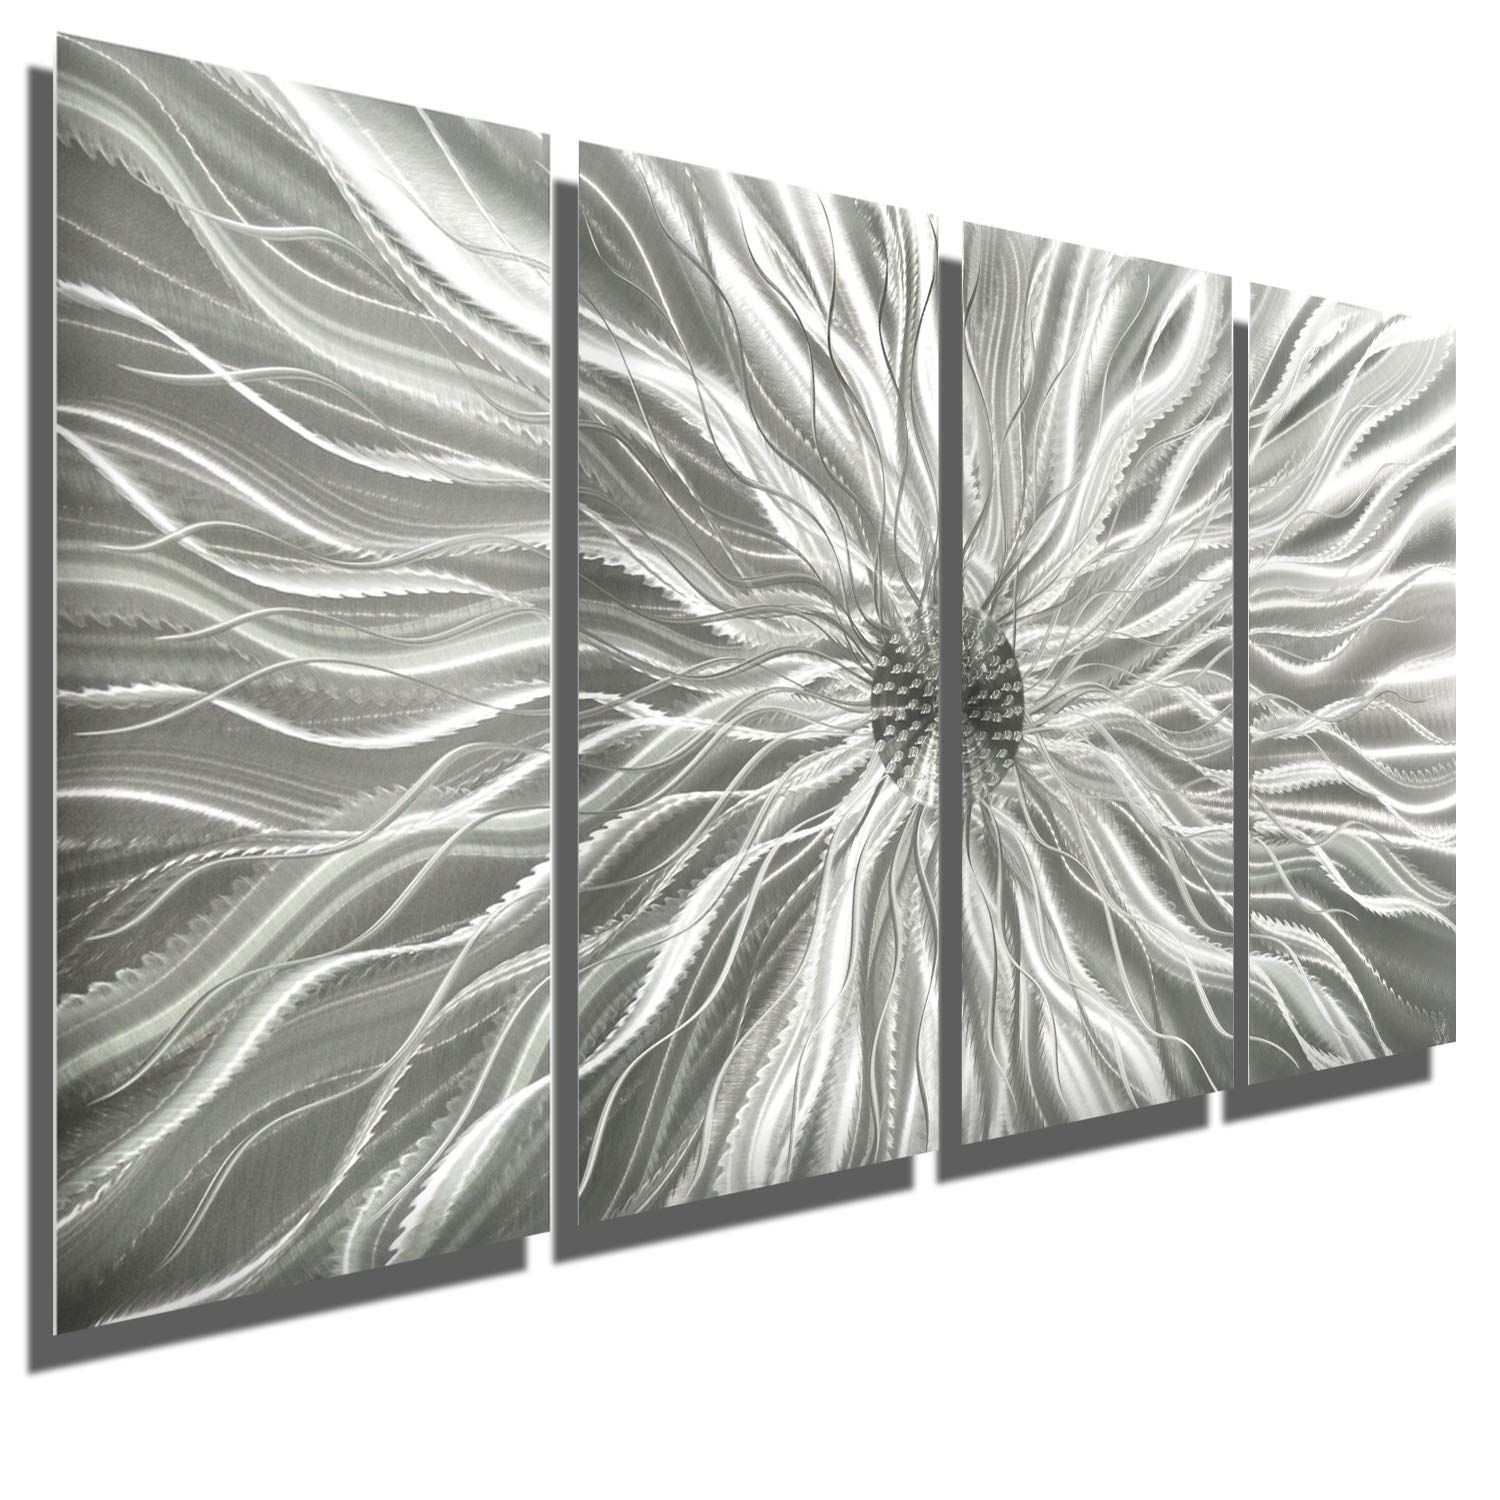 Metal Wall Panel Decor: Amazon In Metallic Wall Art (View 20 of 20)